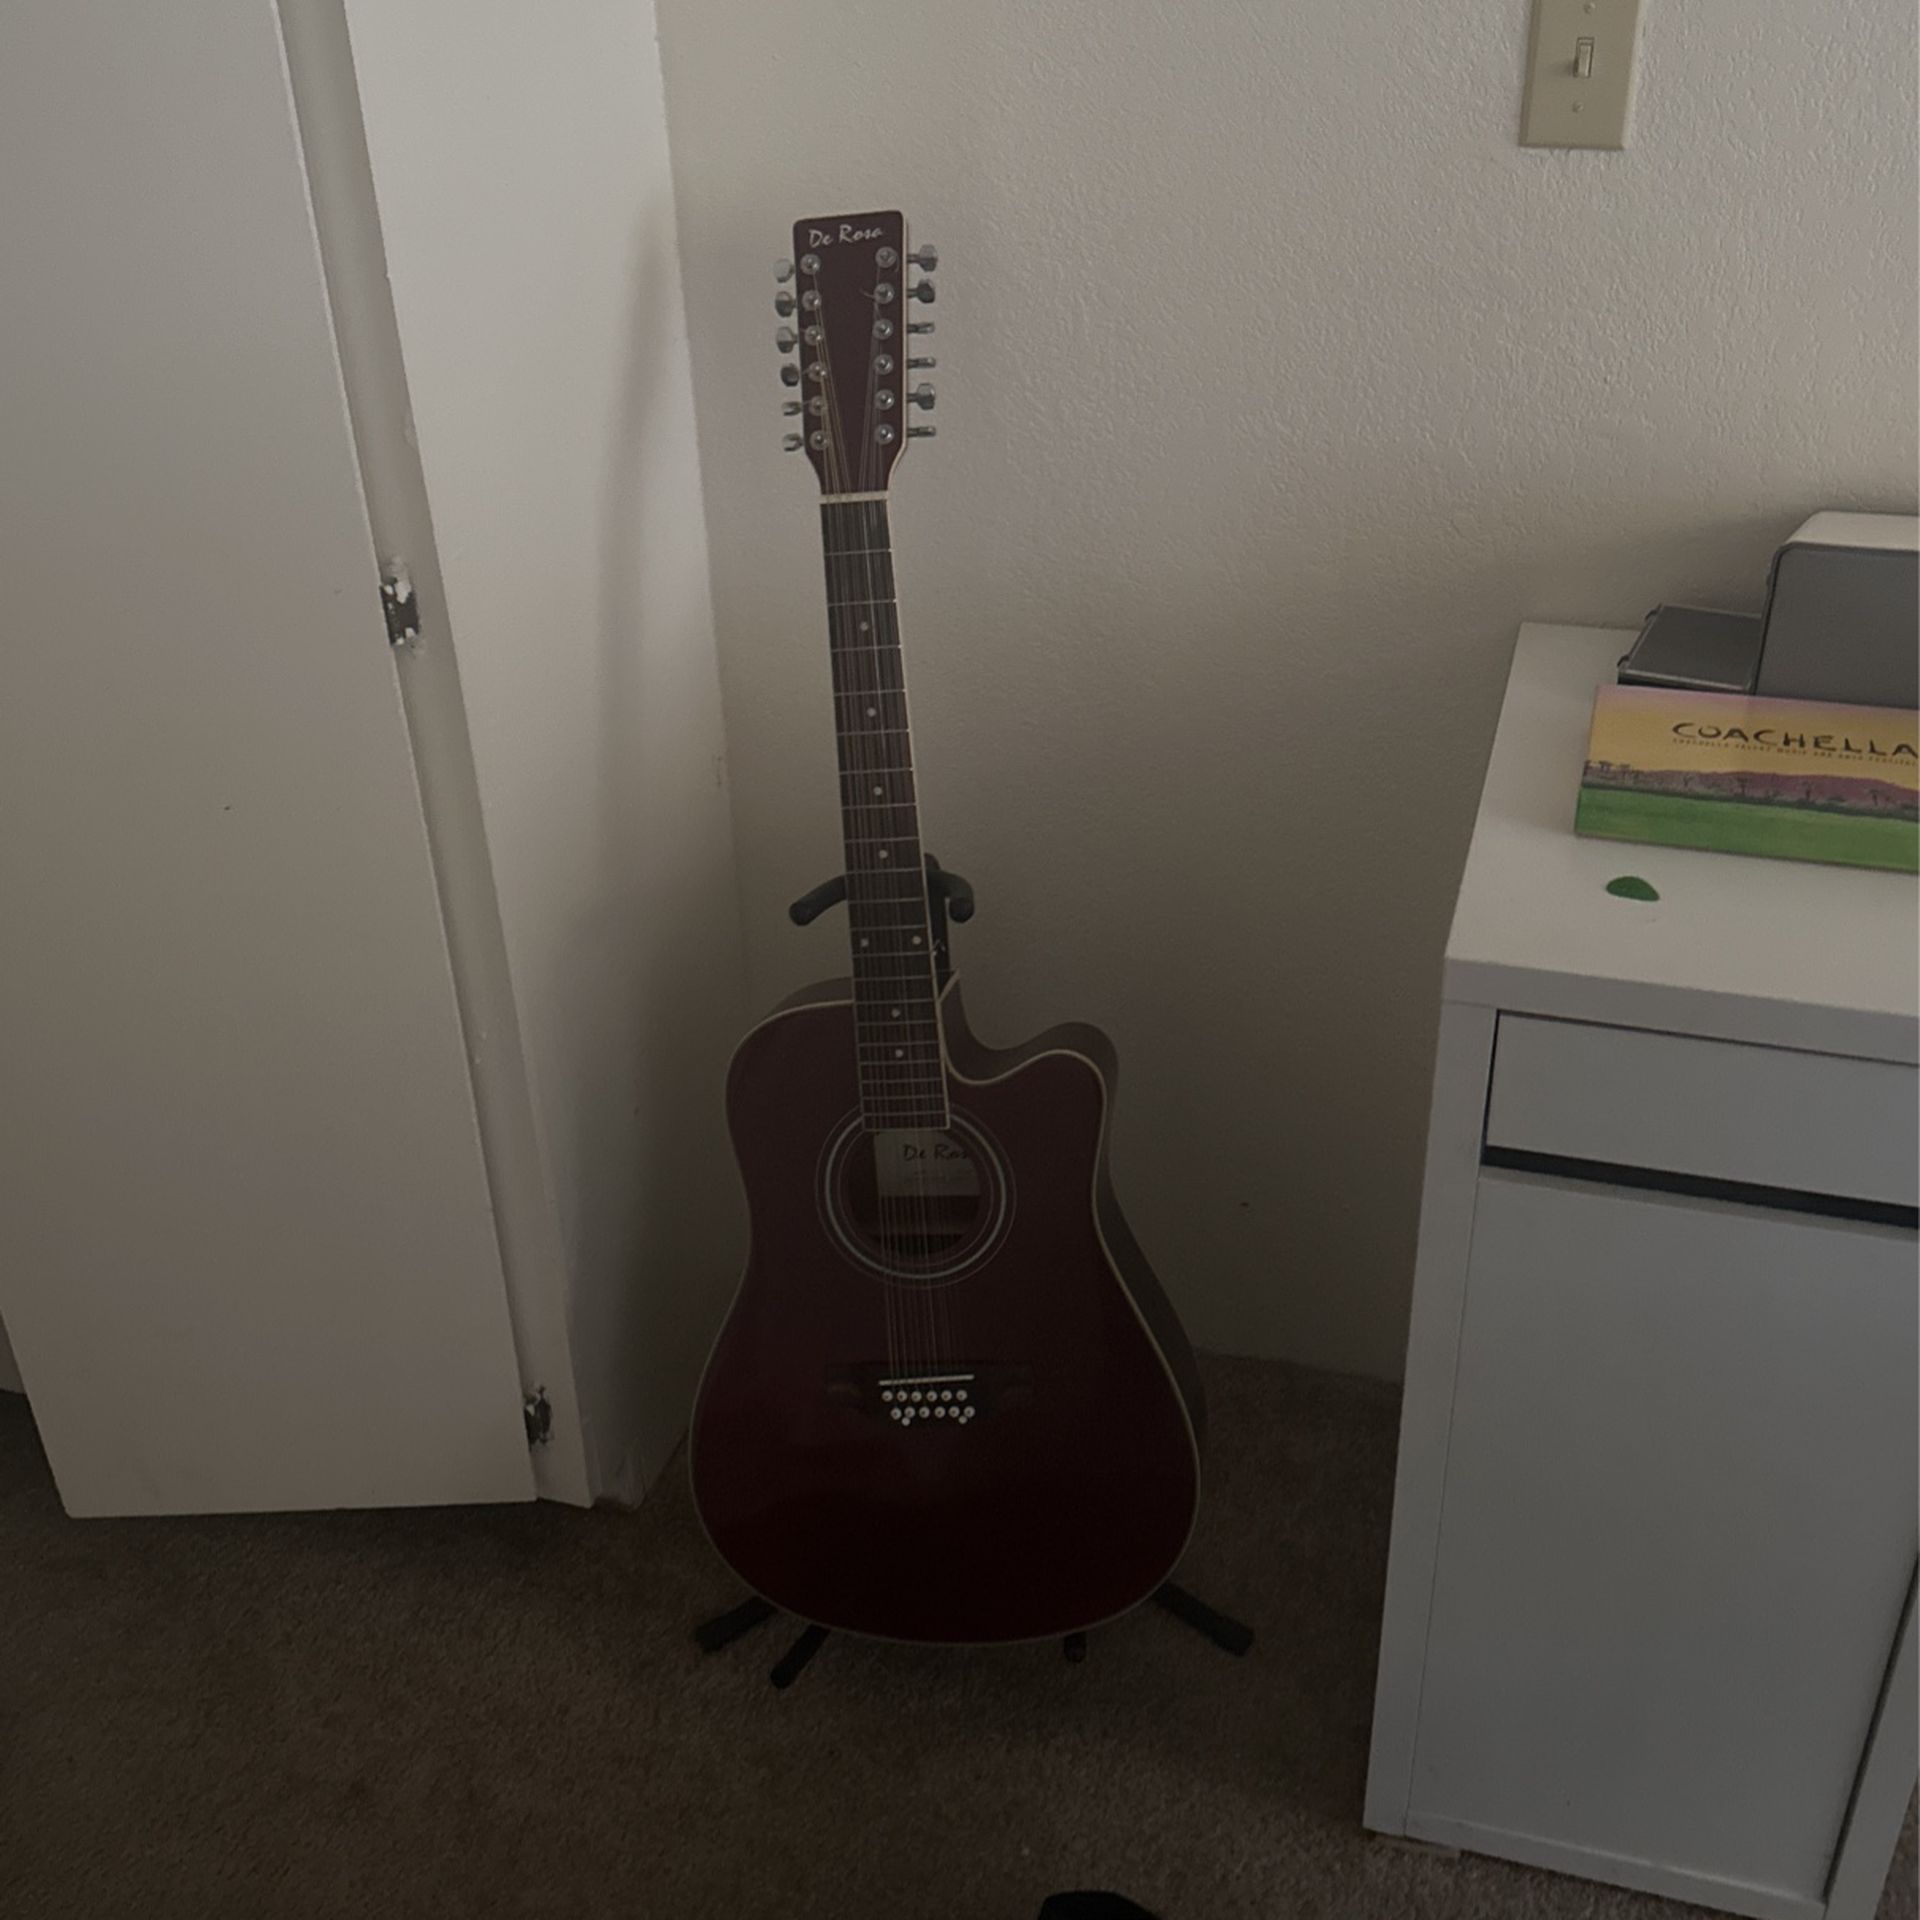 Derosa 12 string acoustic guitar 